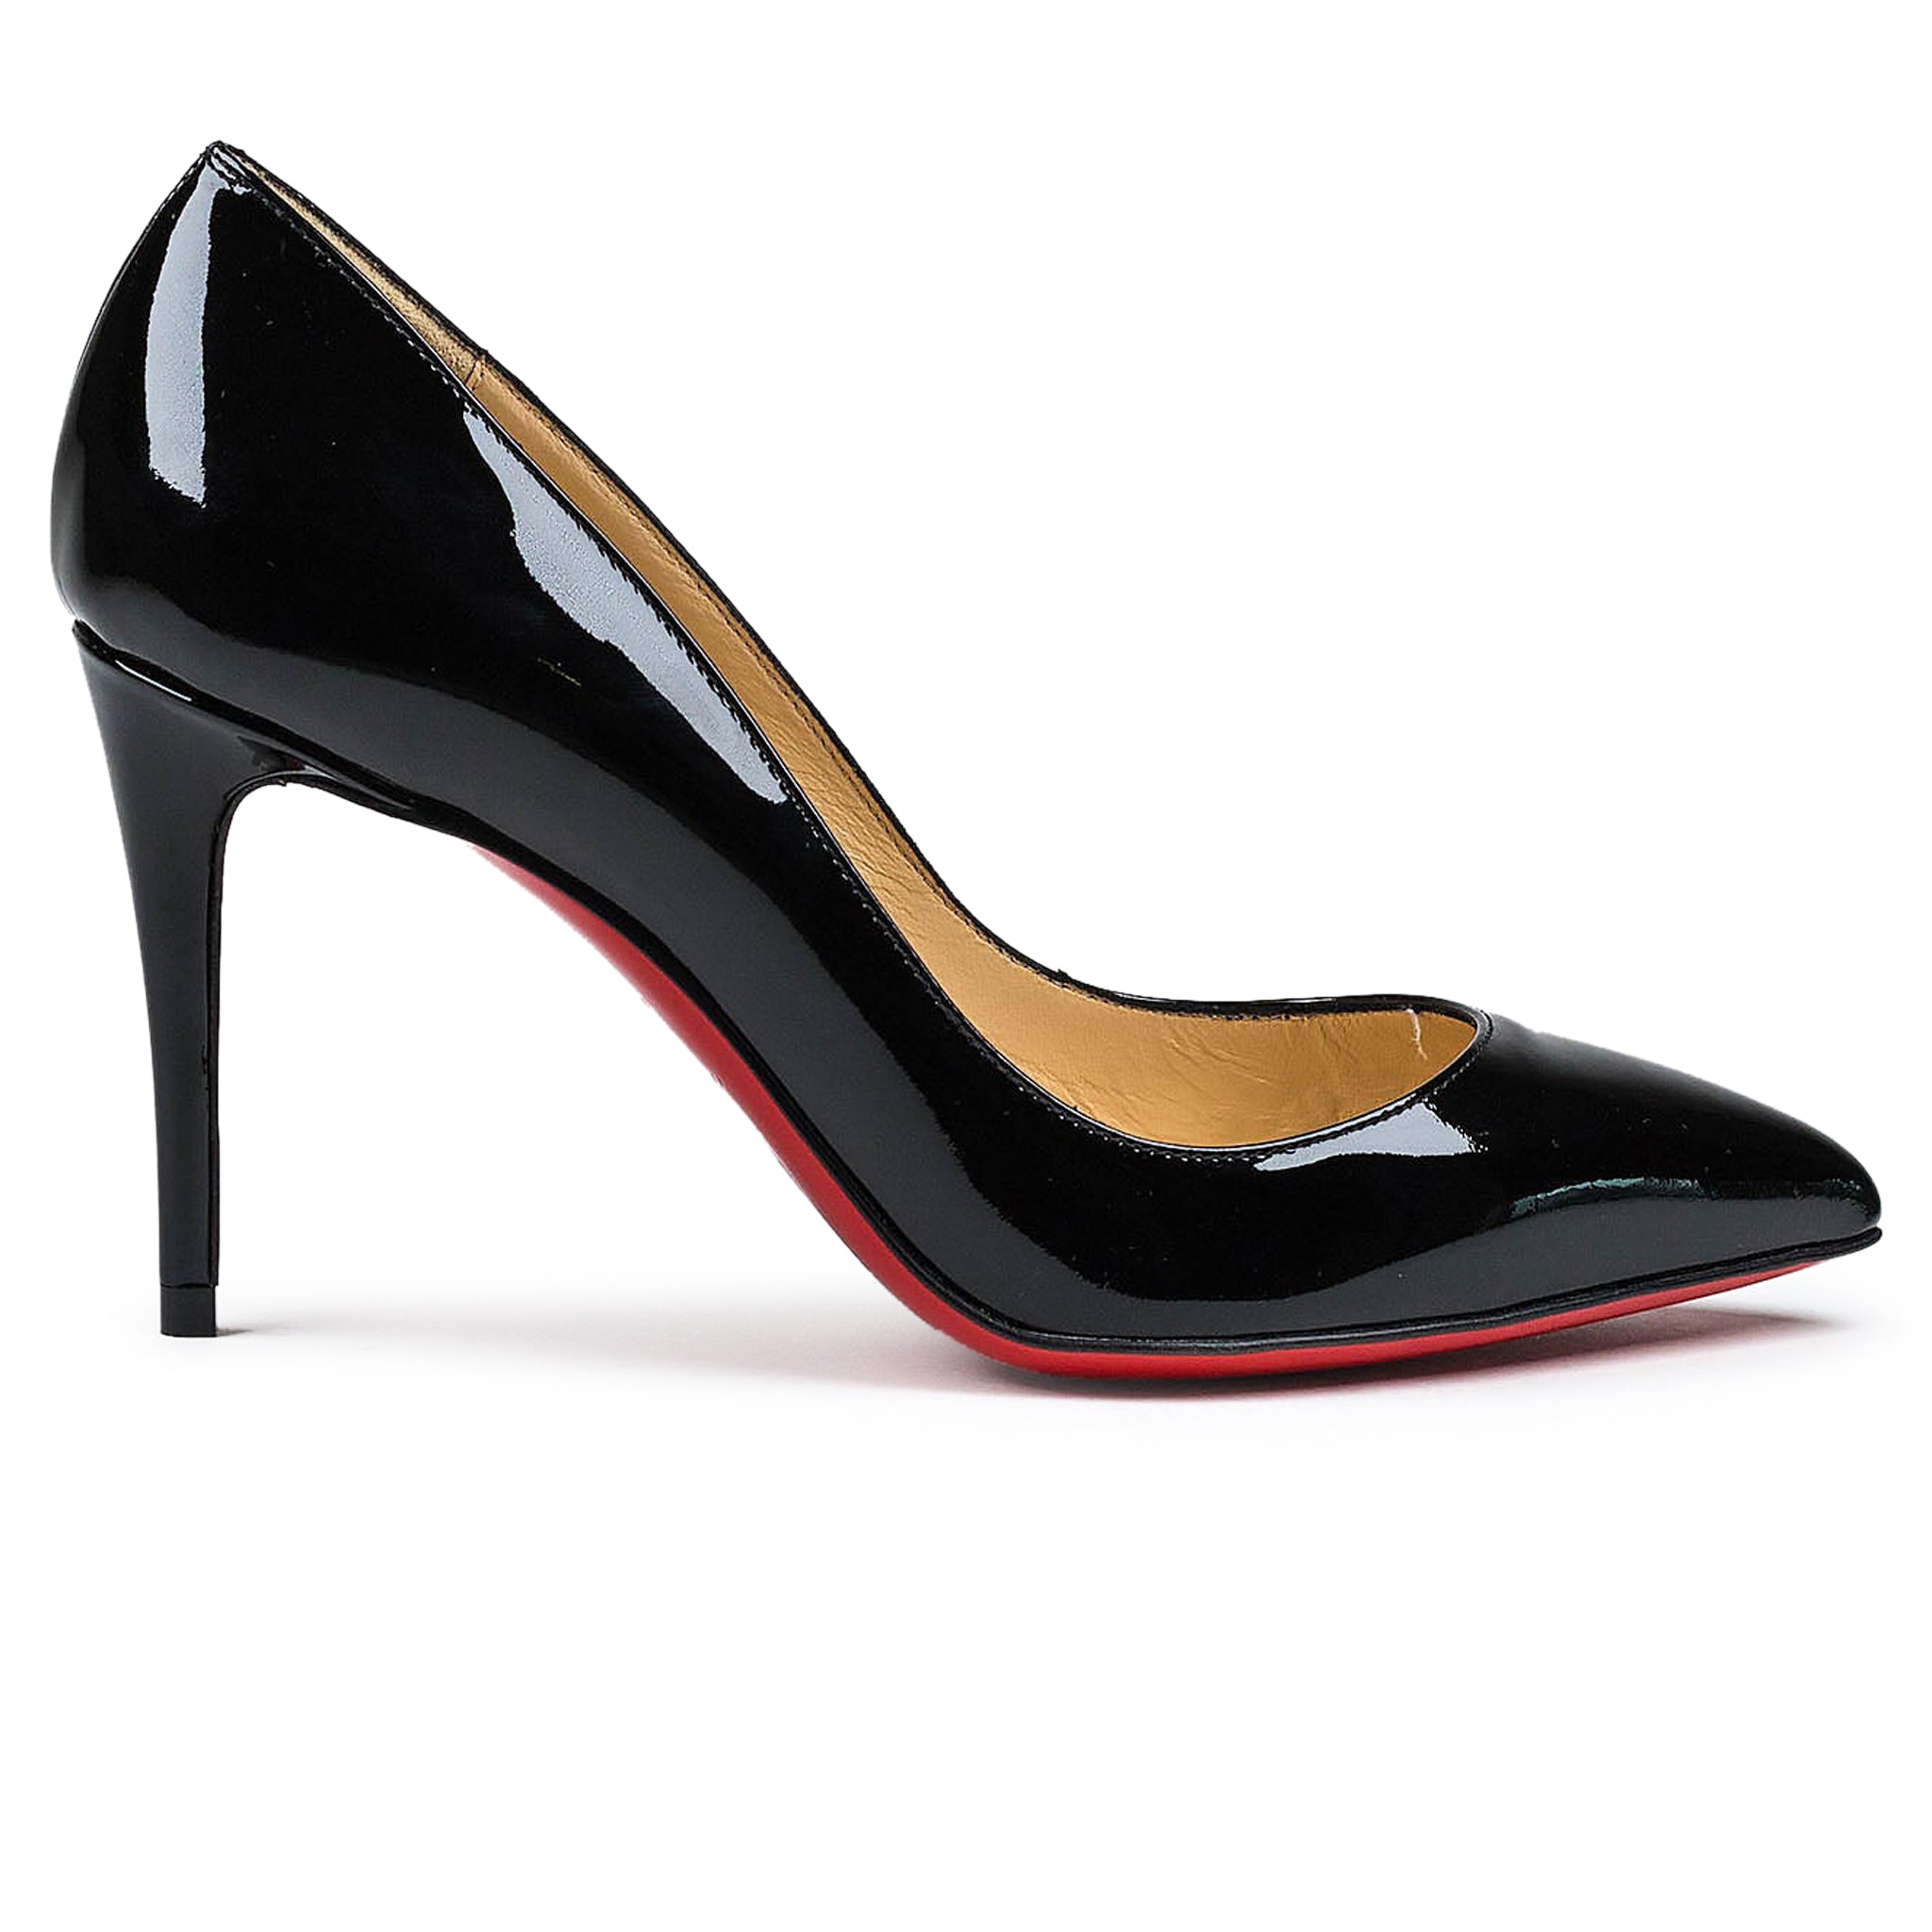 Image of Christian Louboutin Pigalle Follies Patent Black 85 Heel